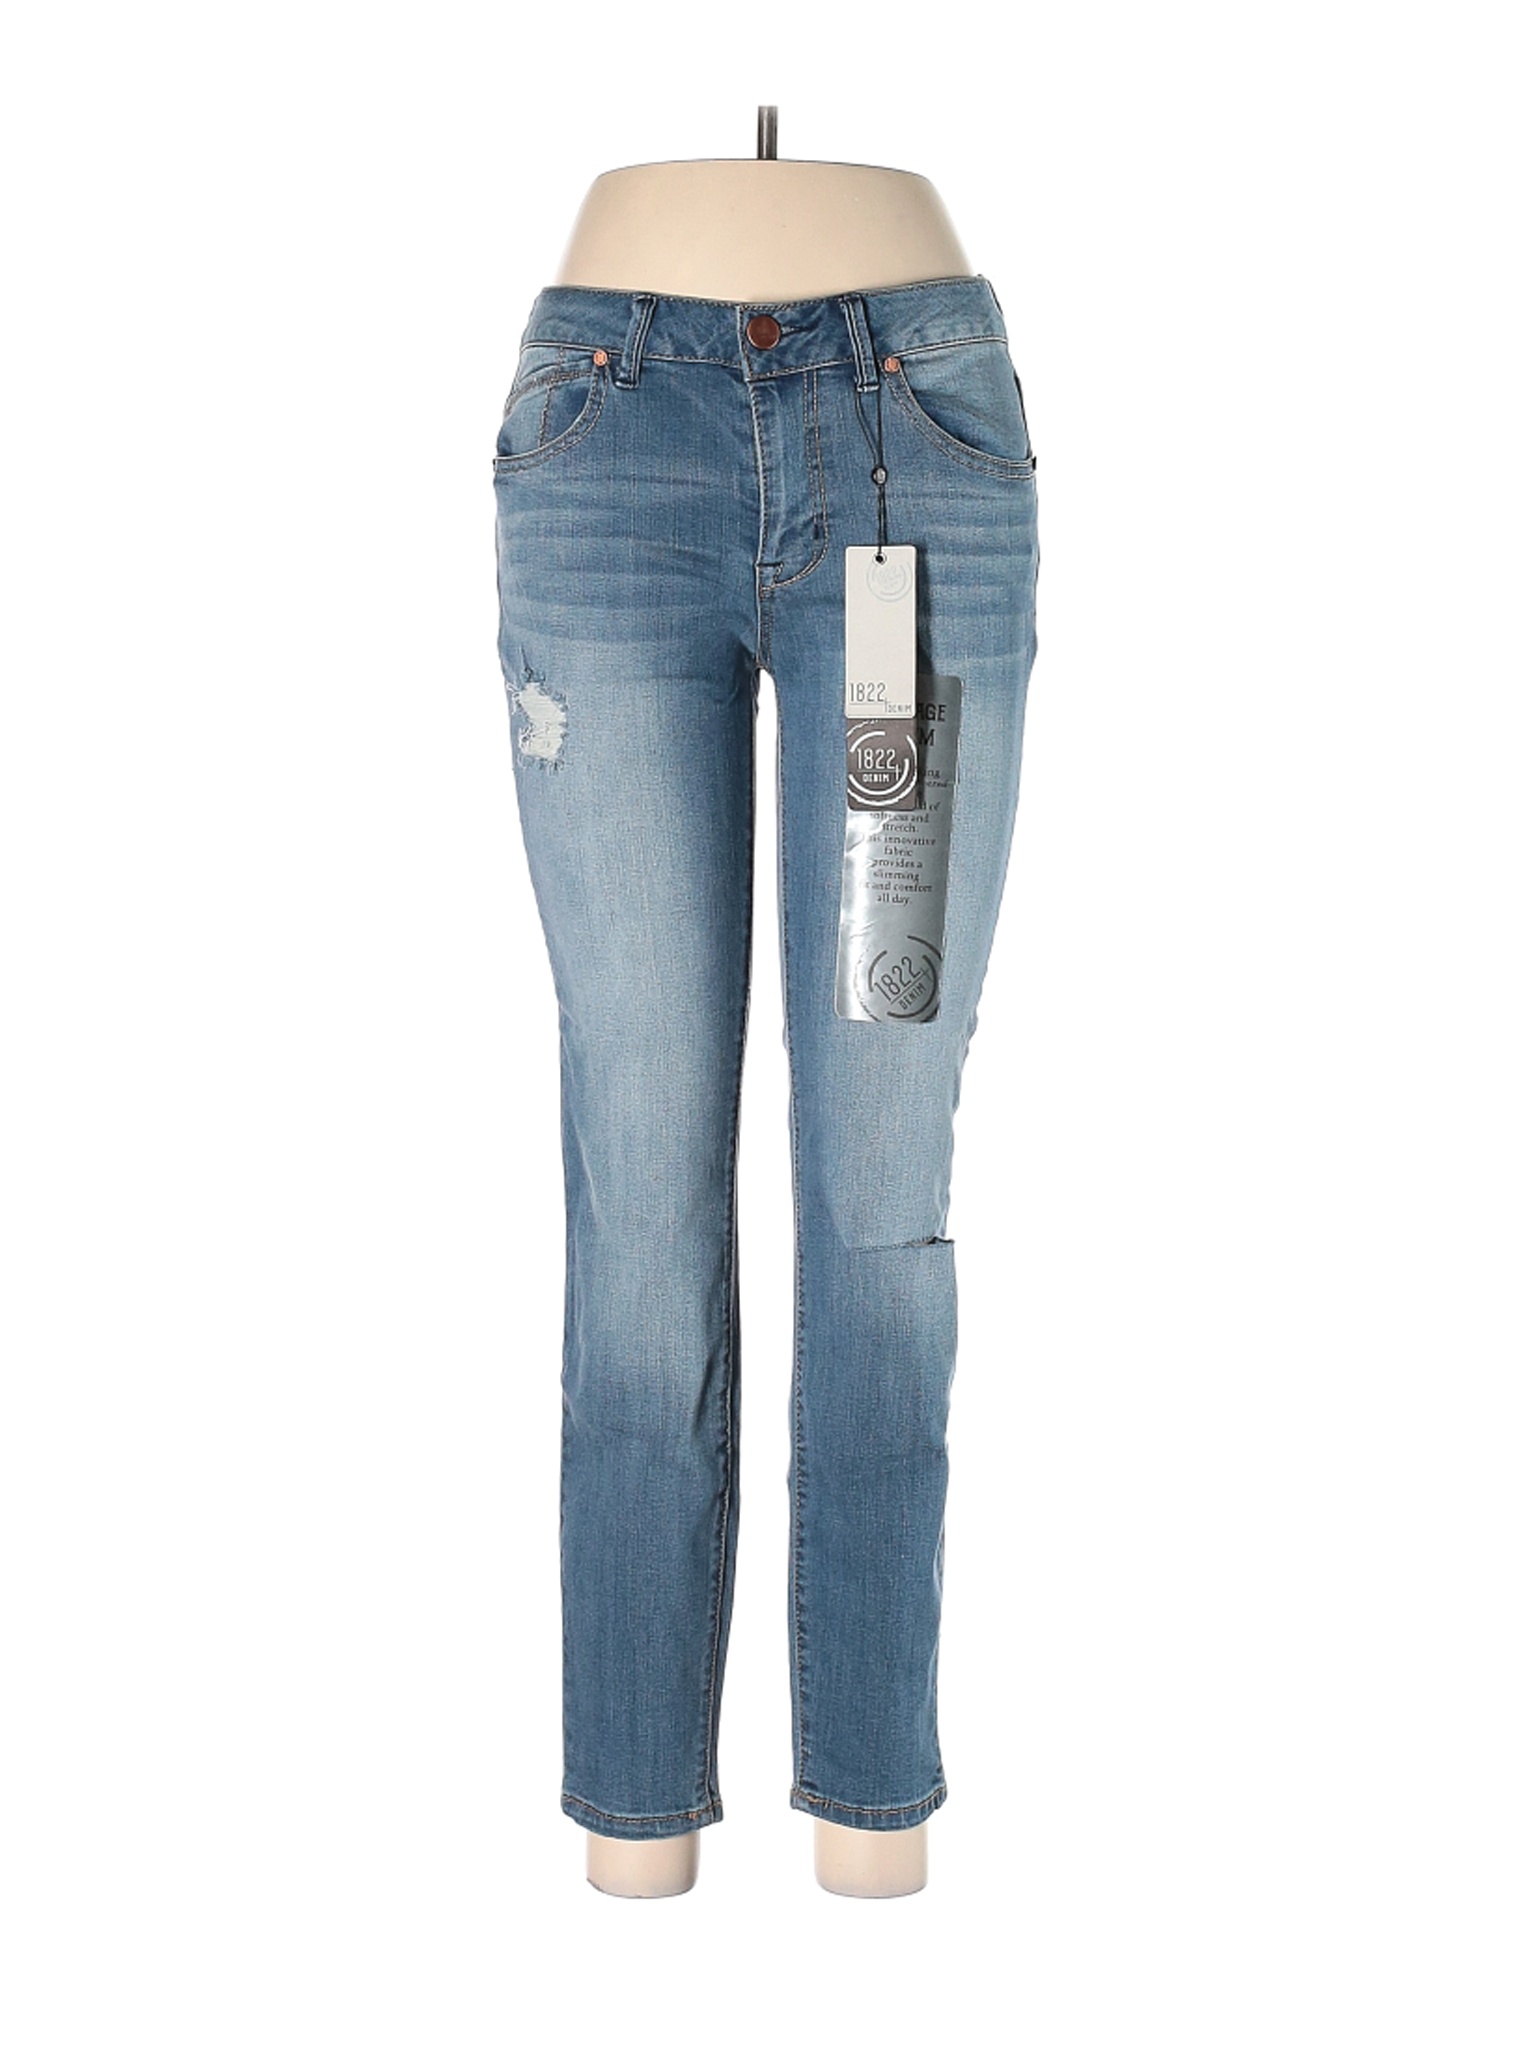 NWT 1822 Denim Women Blue Jeans 6 | eBay